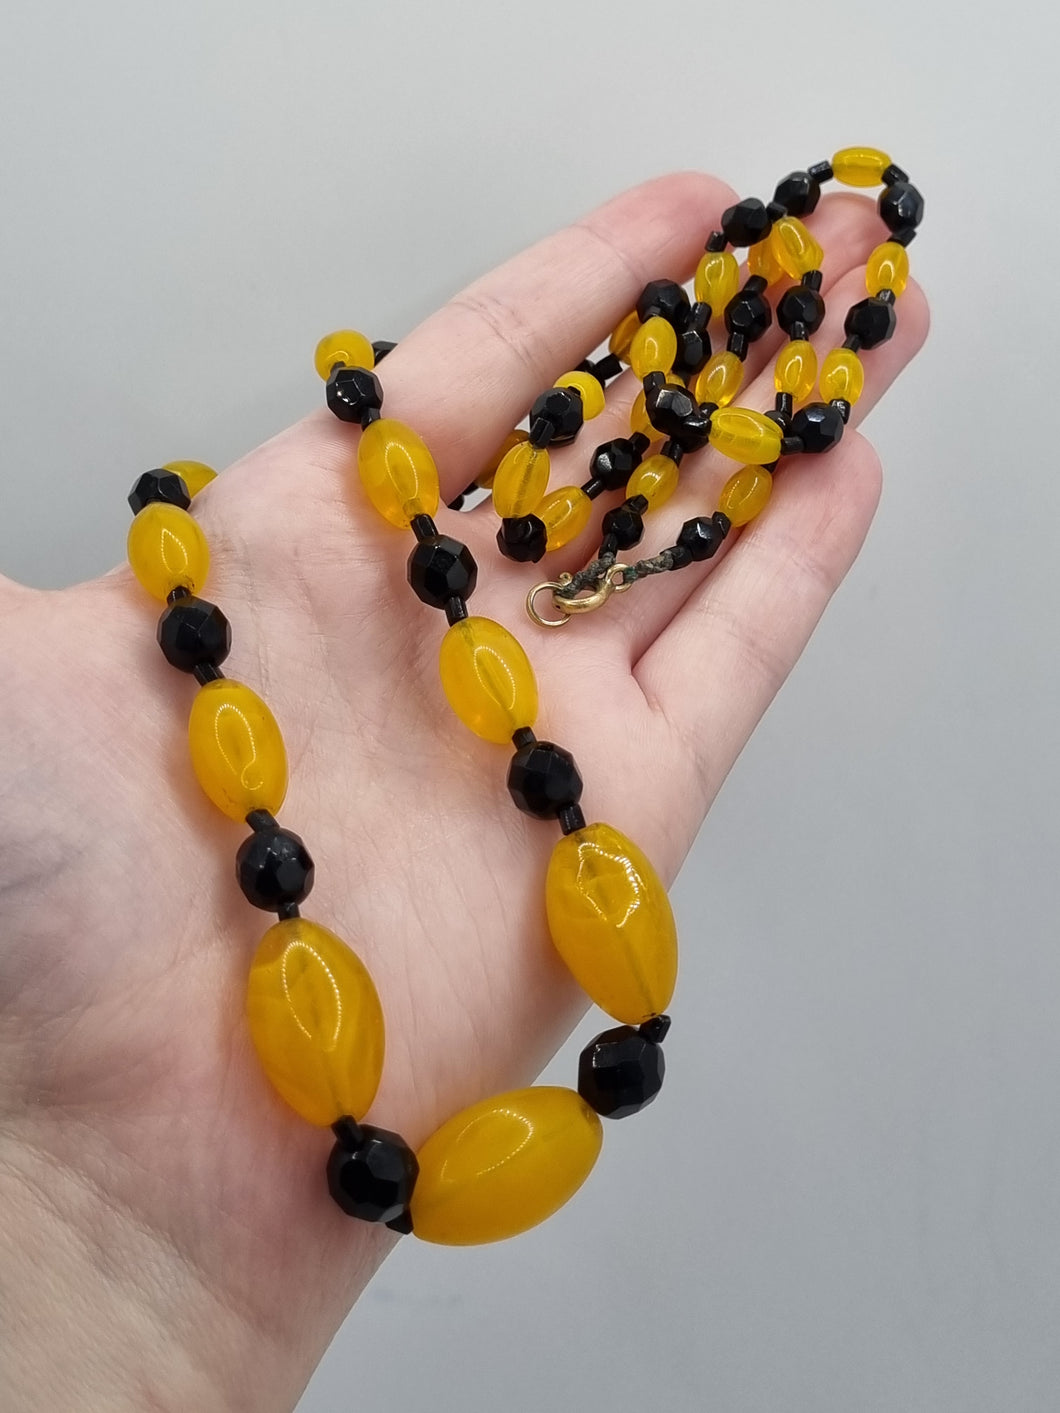 1930s Art Deco Bright Orange and Black Glass Necklace